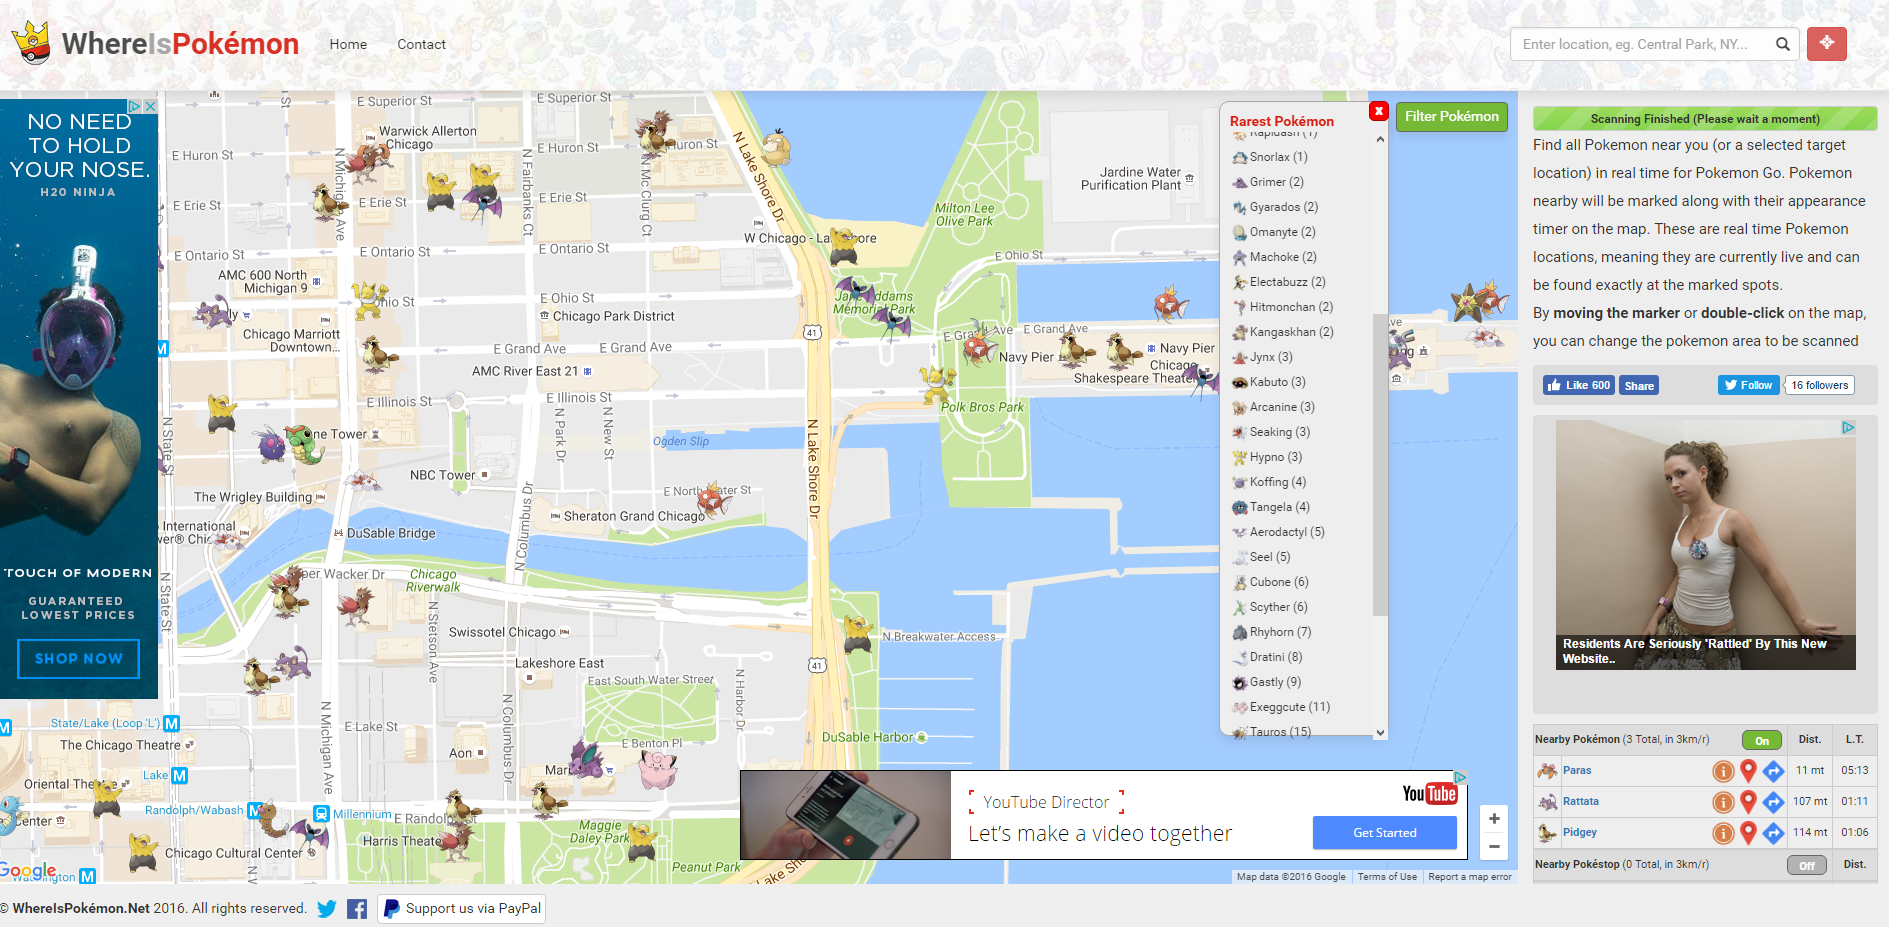 How to Get Zapdos in Pokemon Go? - Pokemon Go Map